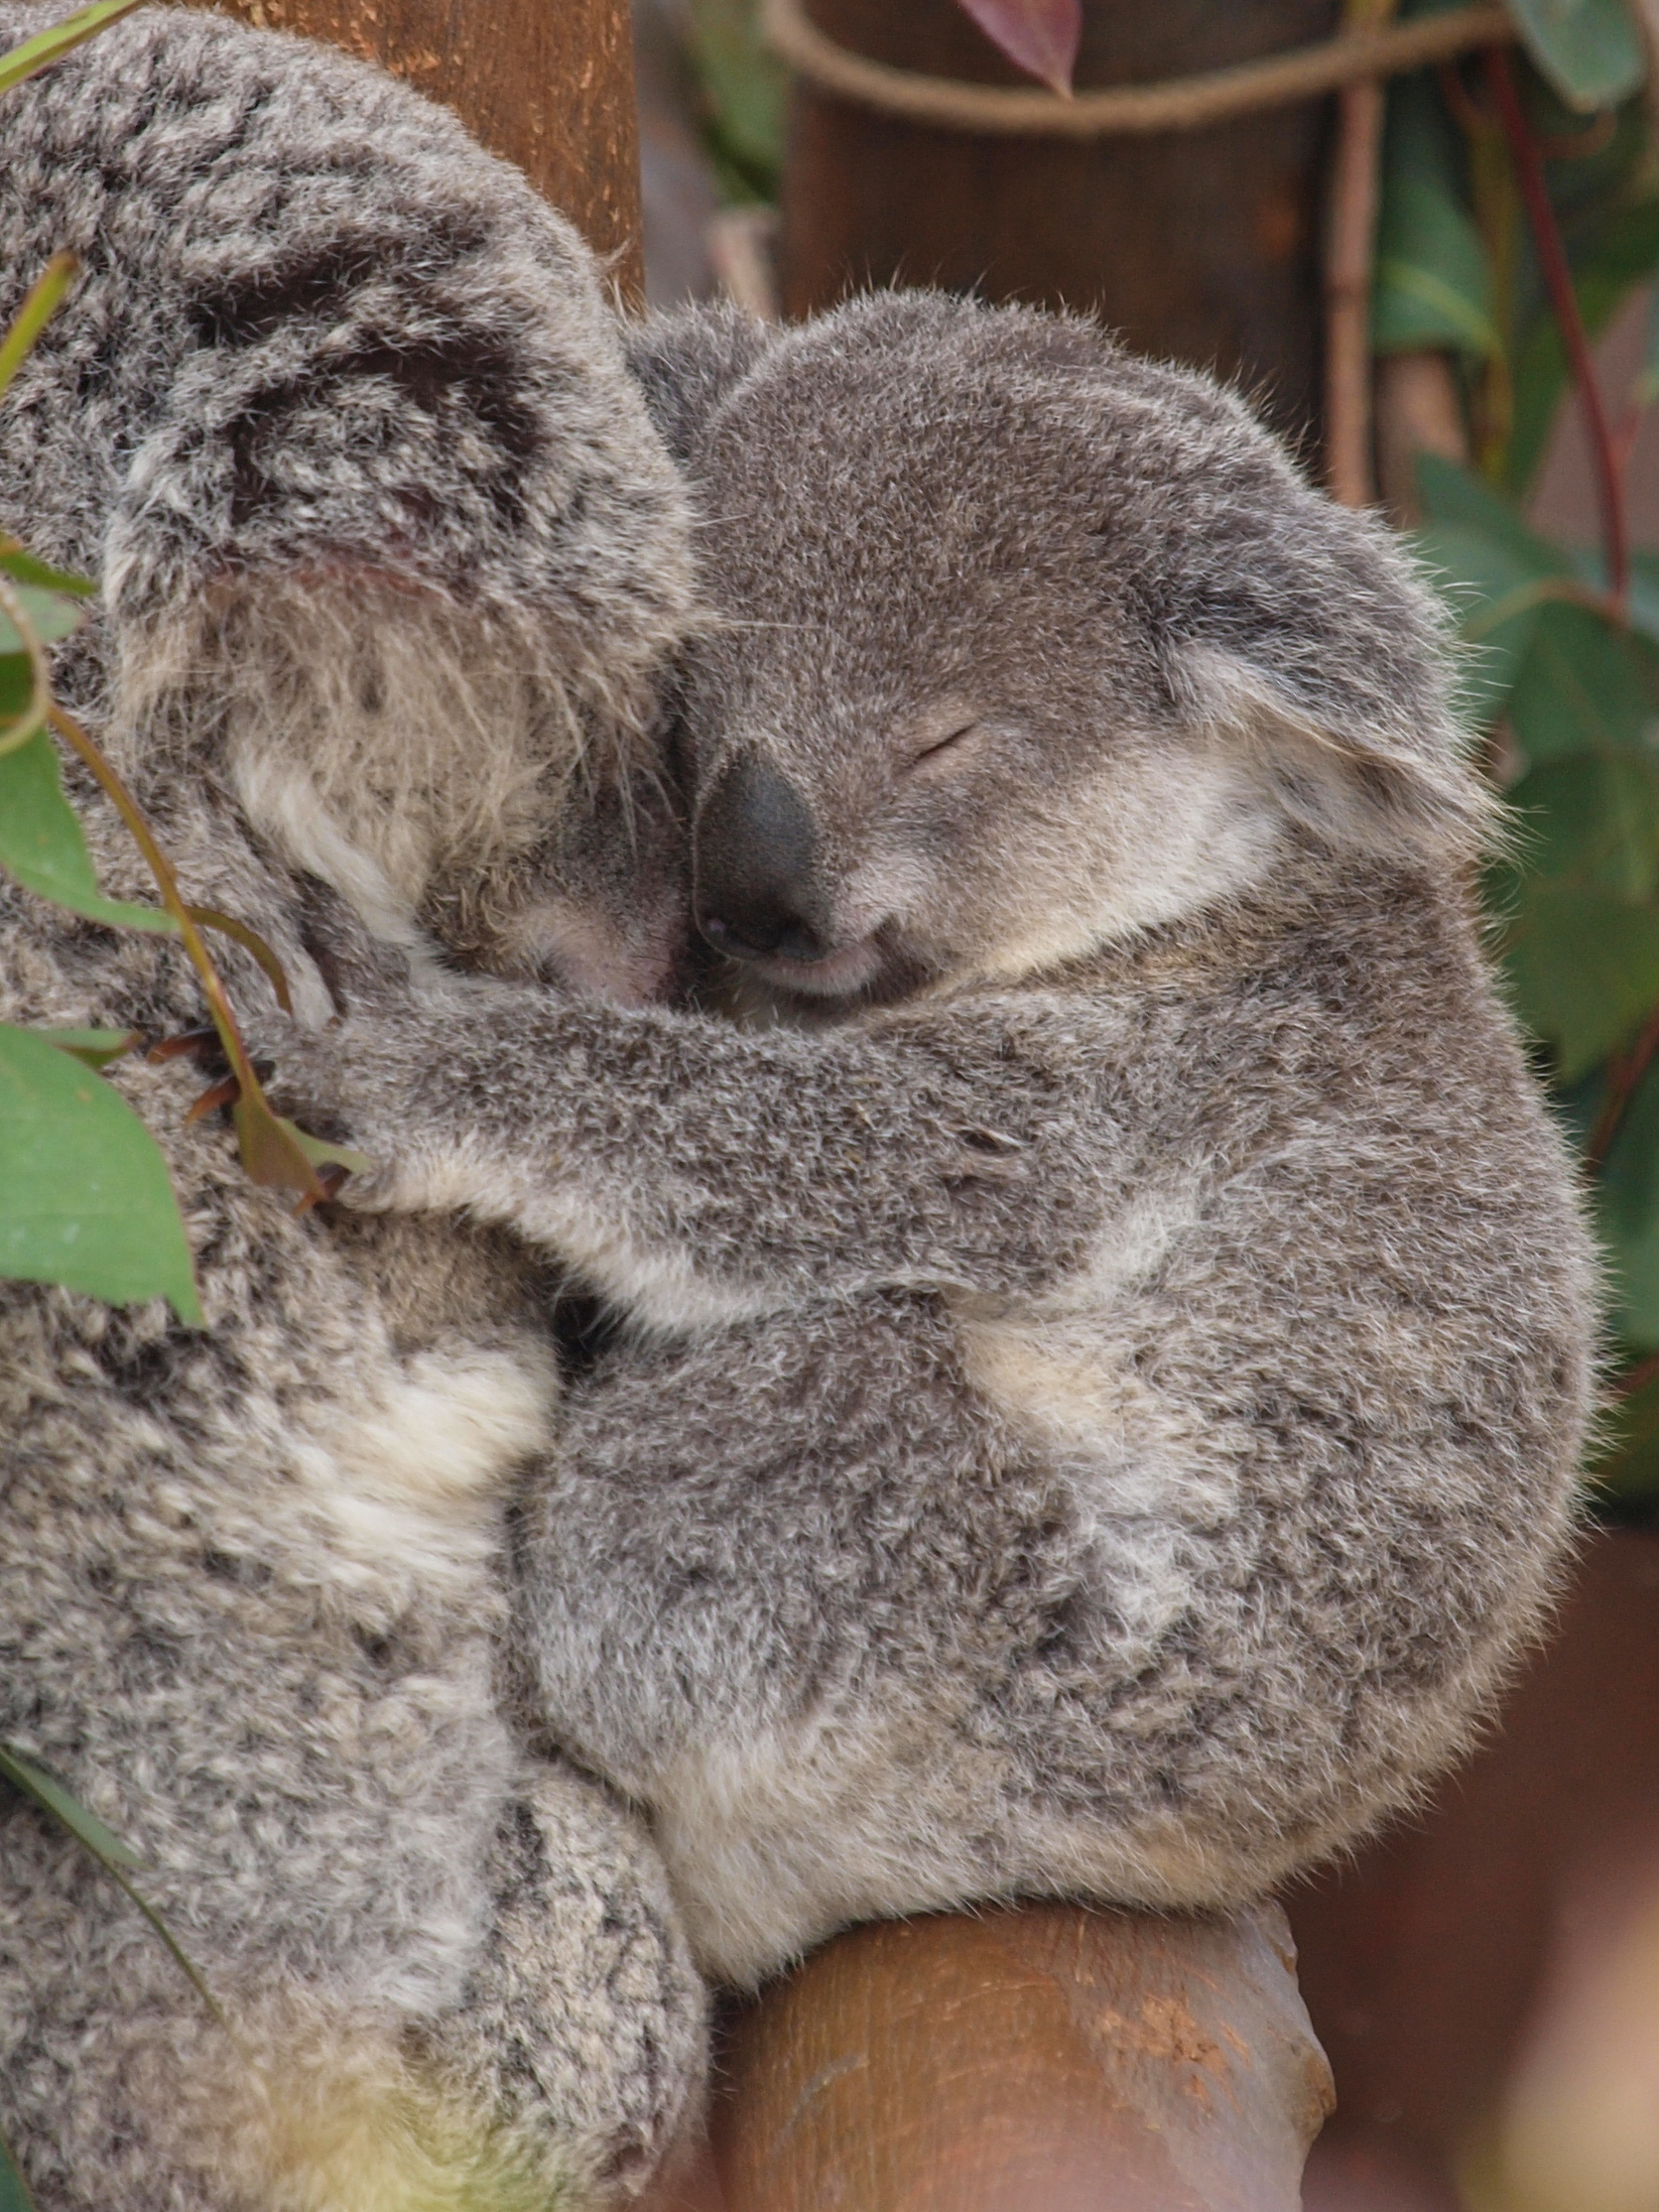 Capt Mondo's Photo Blog » Blog Archive » Sleeping Koala and its Mother